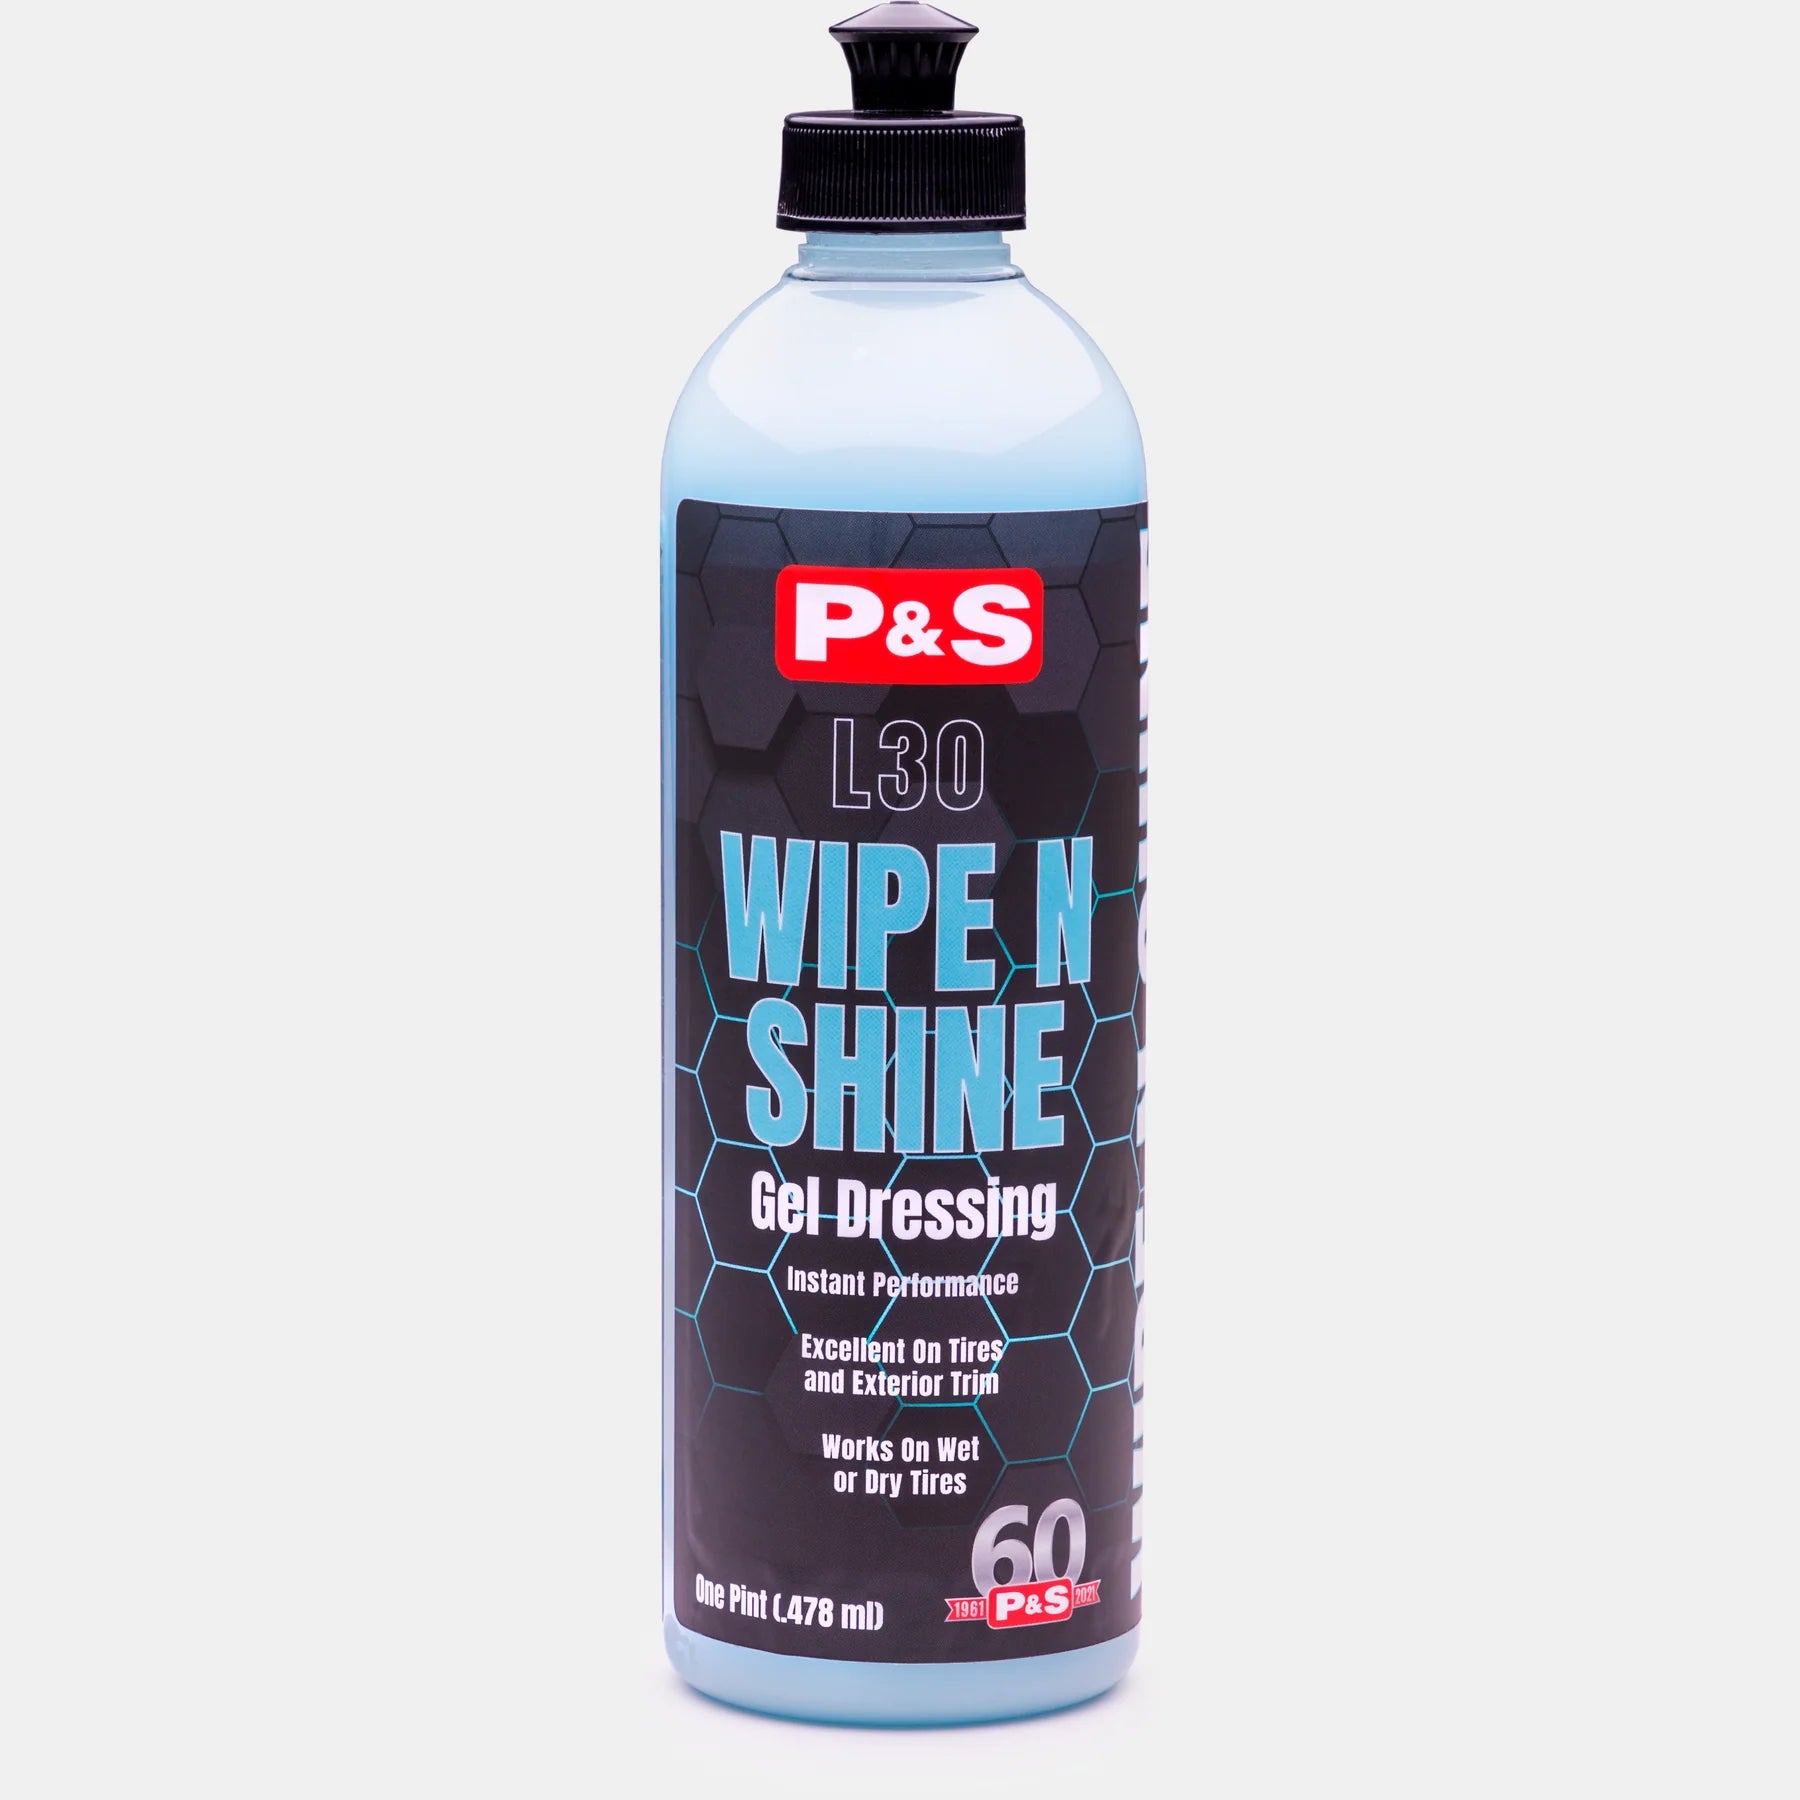 P&S Wipe N Shine